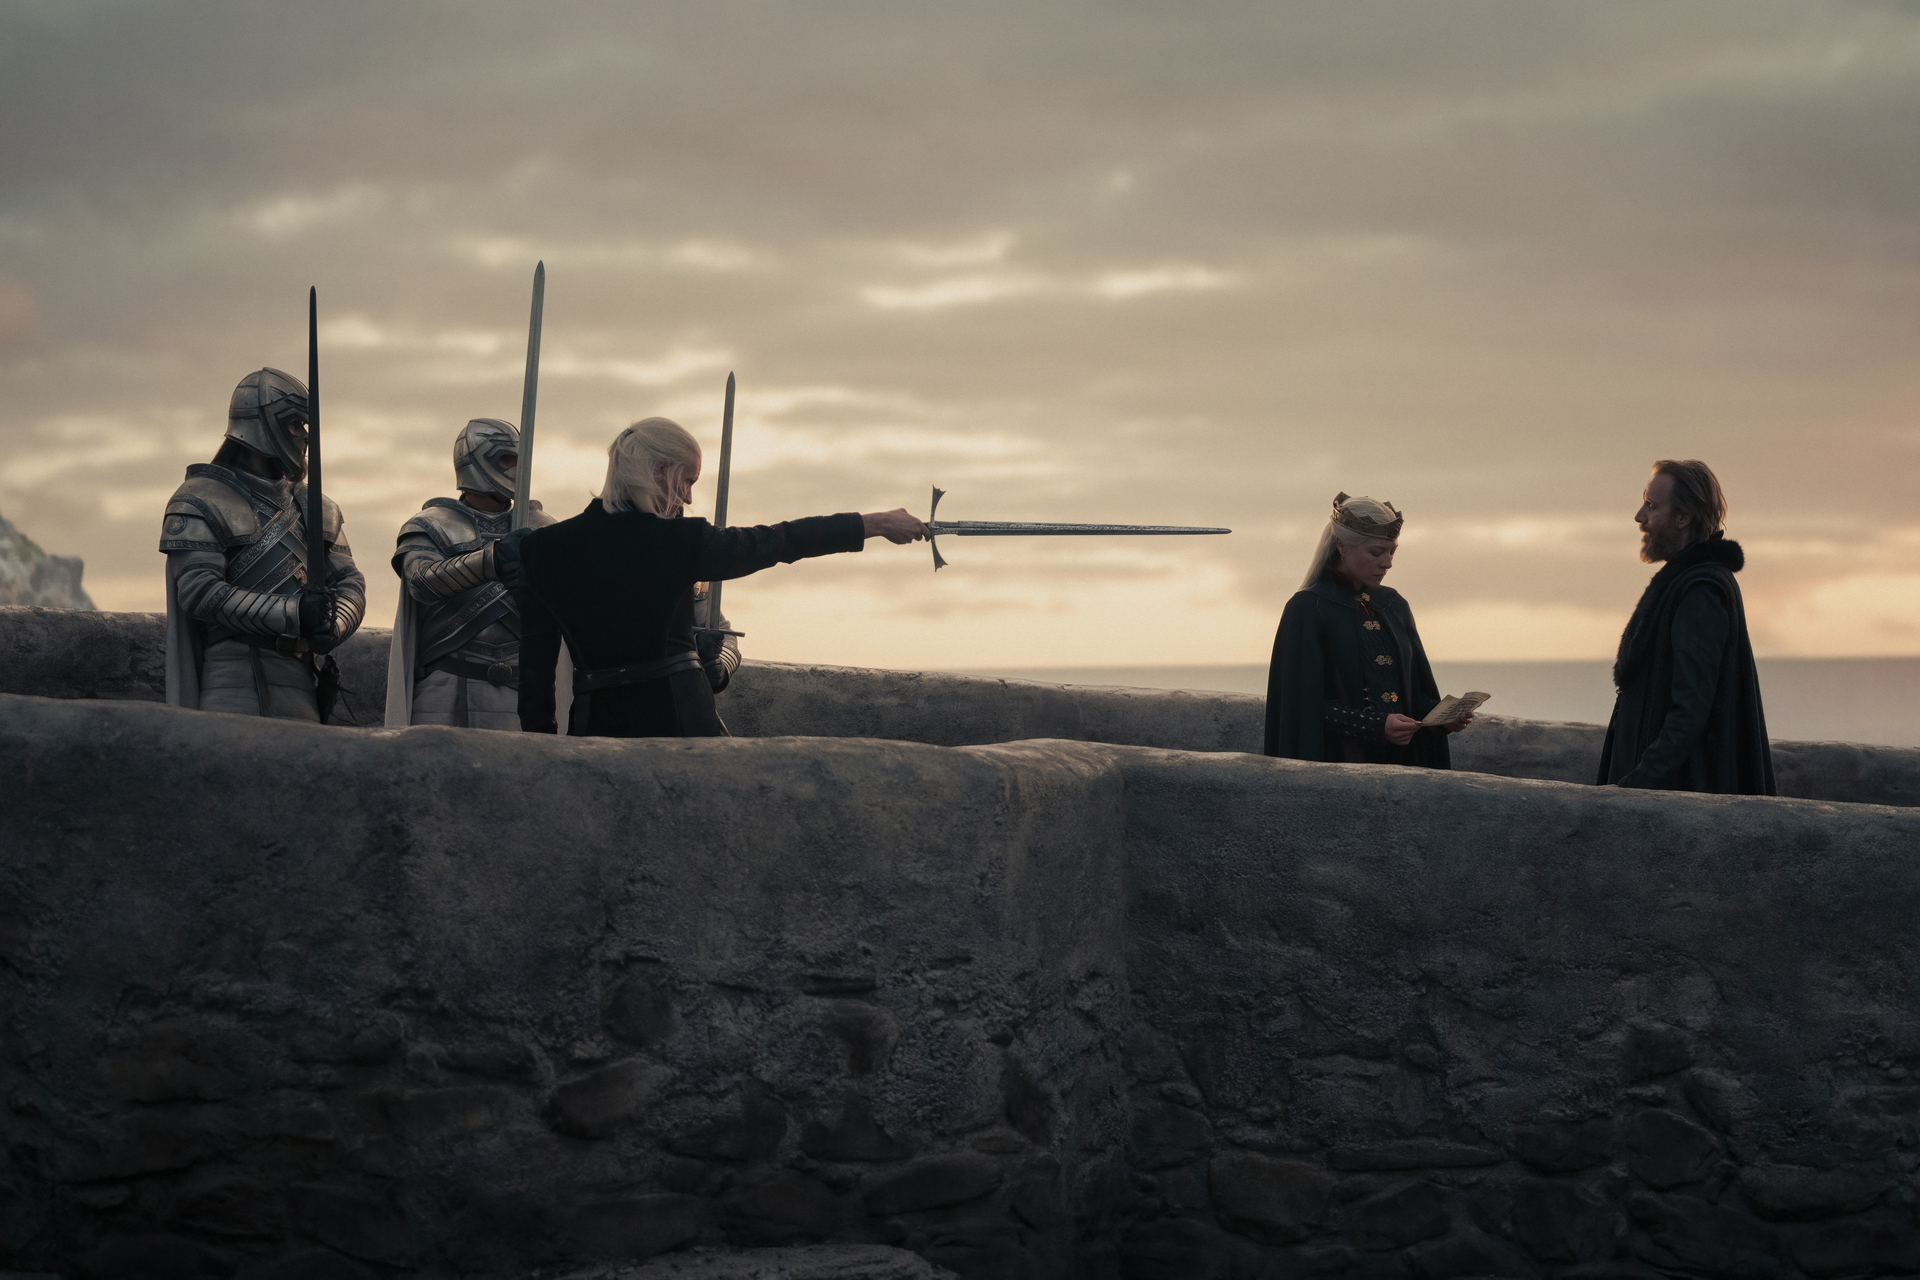 Matt Smith as Daemon Targaryen, facing off against Rhys Ifans as Otto Hightower and Emma D’Arcy as Rhaenyra Targaryen in HBO’s House of the Dragon